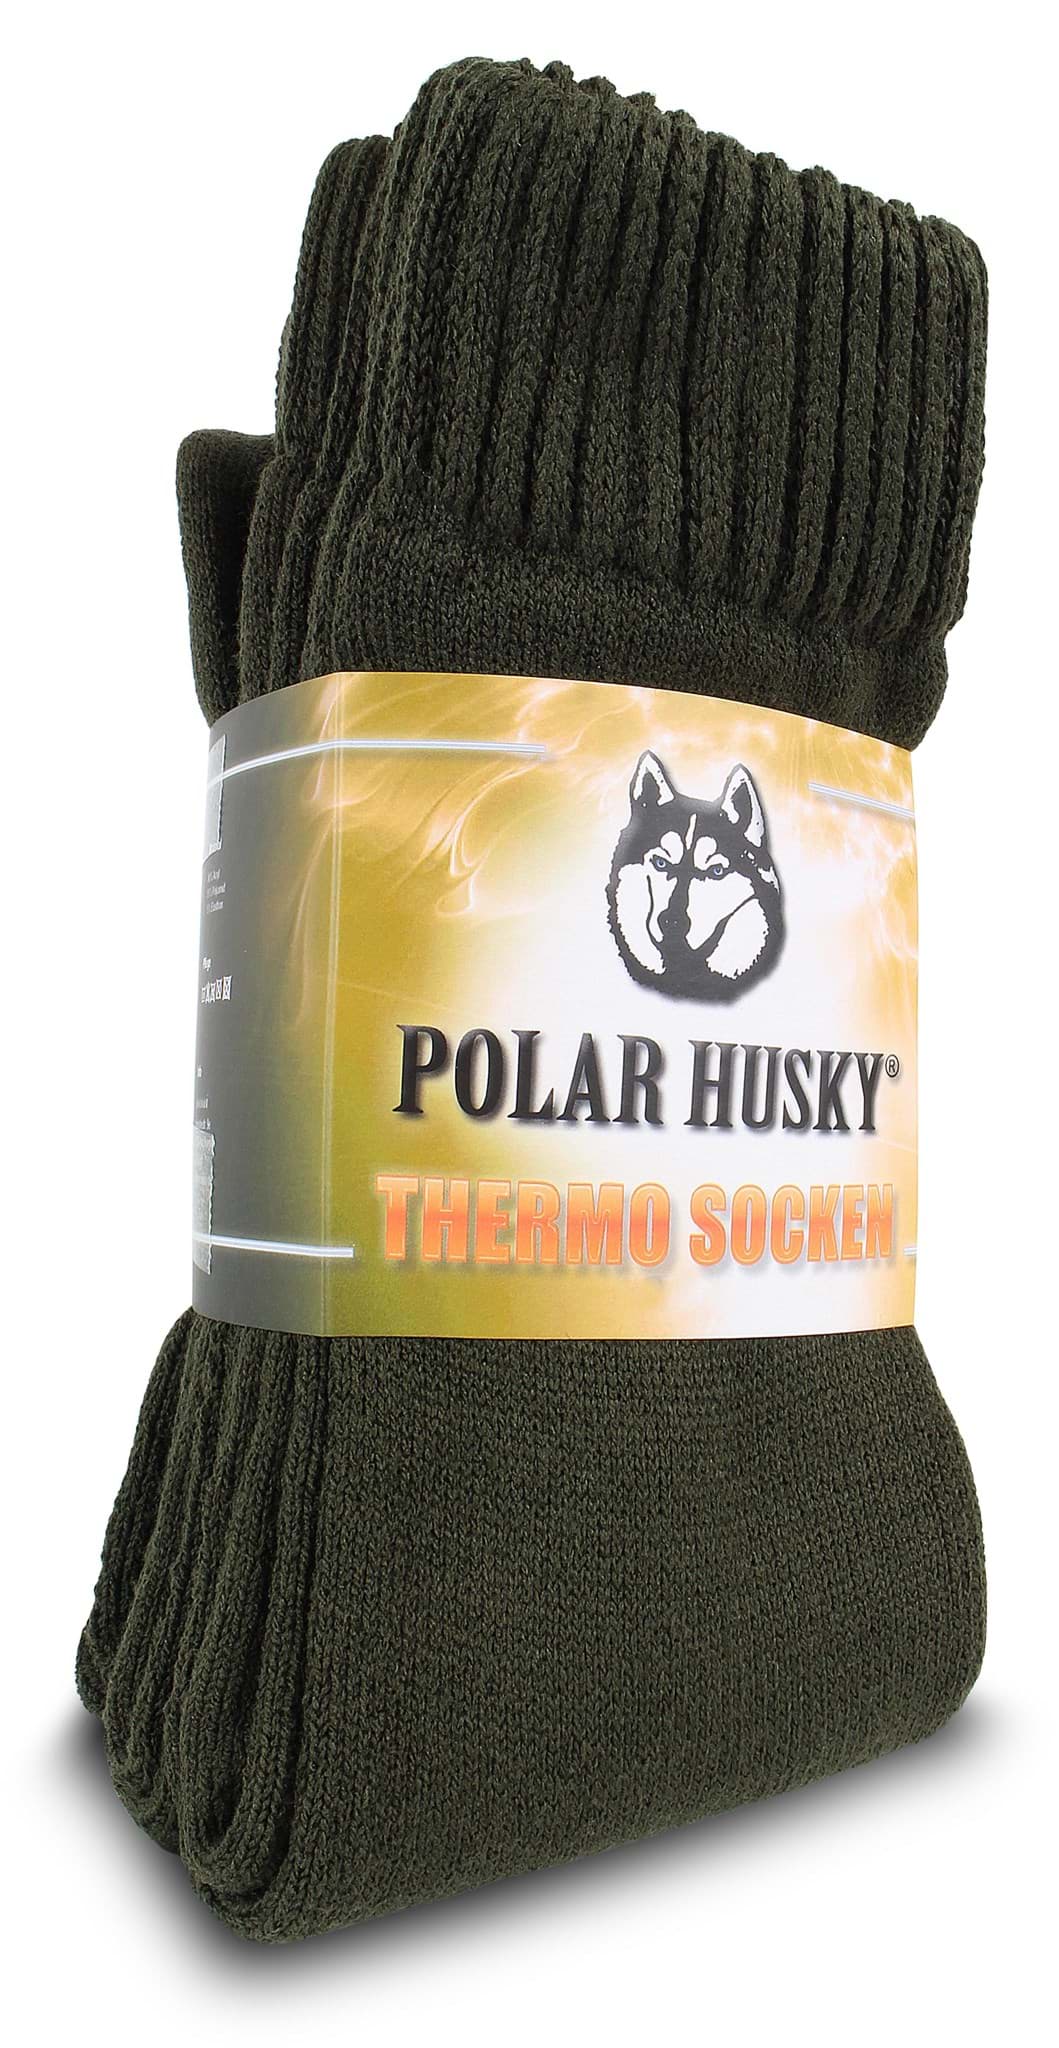 Bild von 3 Paar Polar Husky Thermo-Socken Oliv